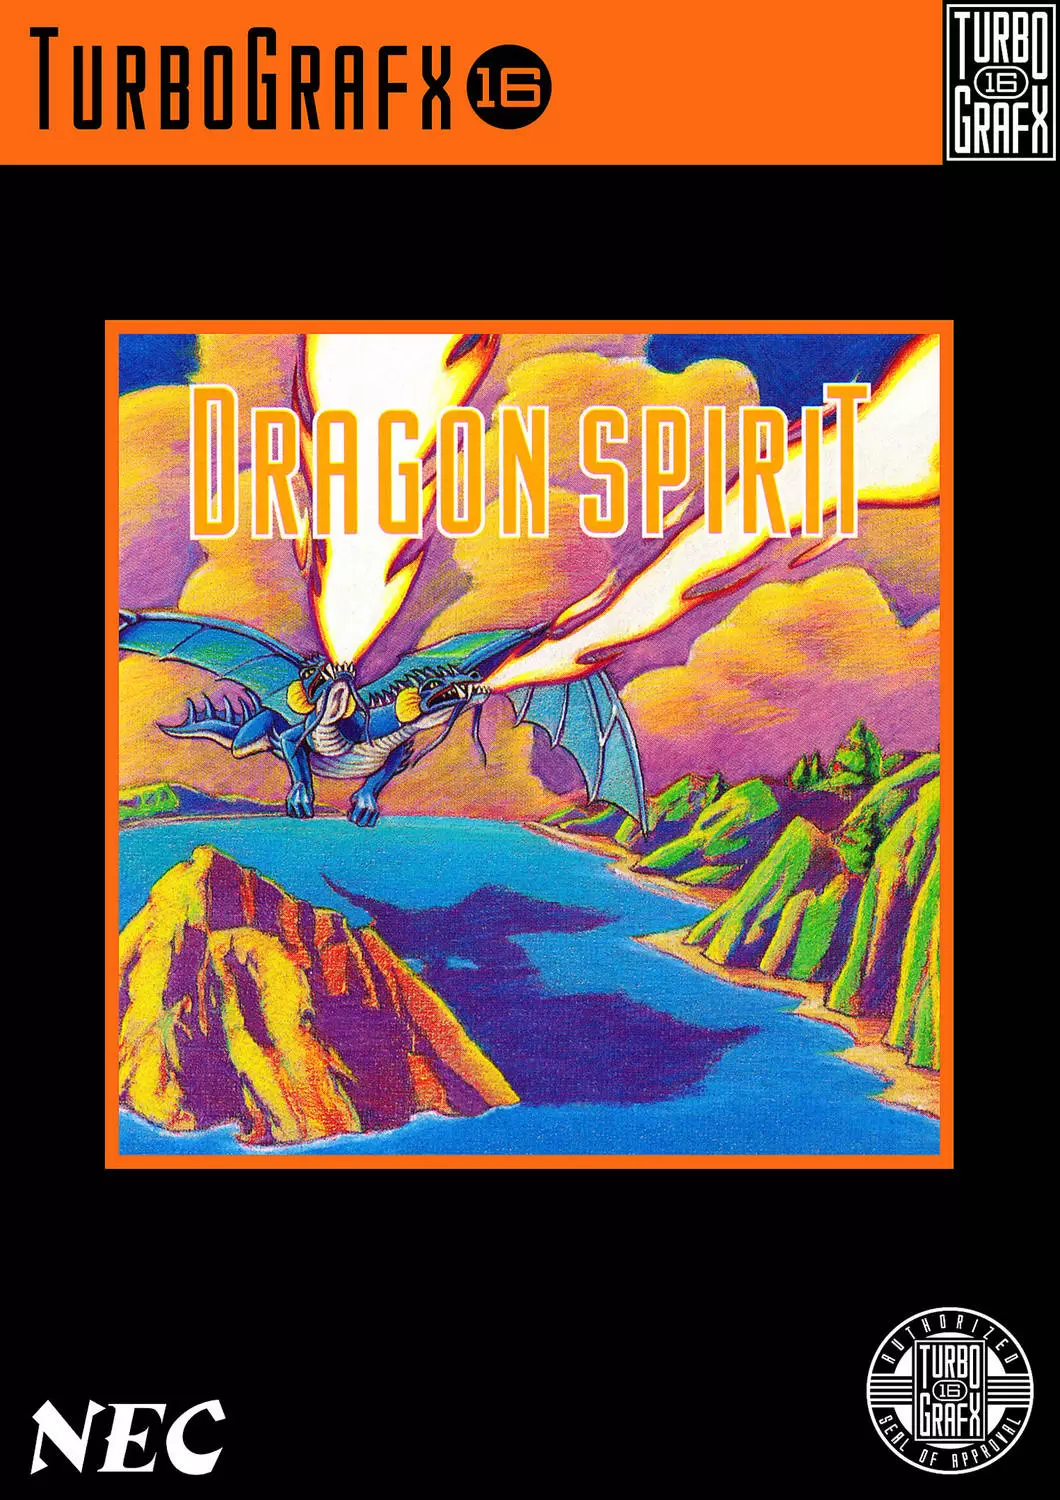 Turbo Grafx 16 (PC Engine) - Dragon Spirit